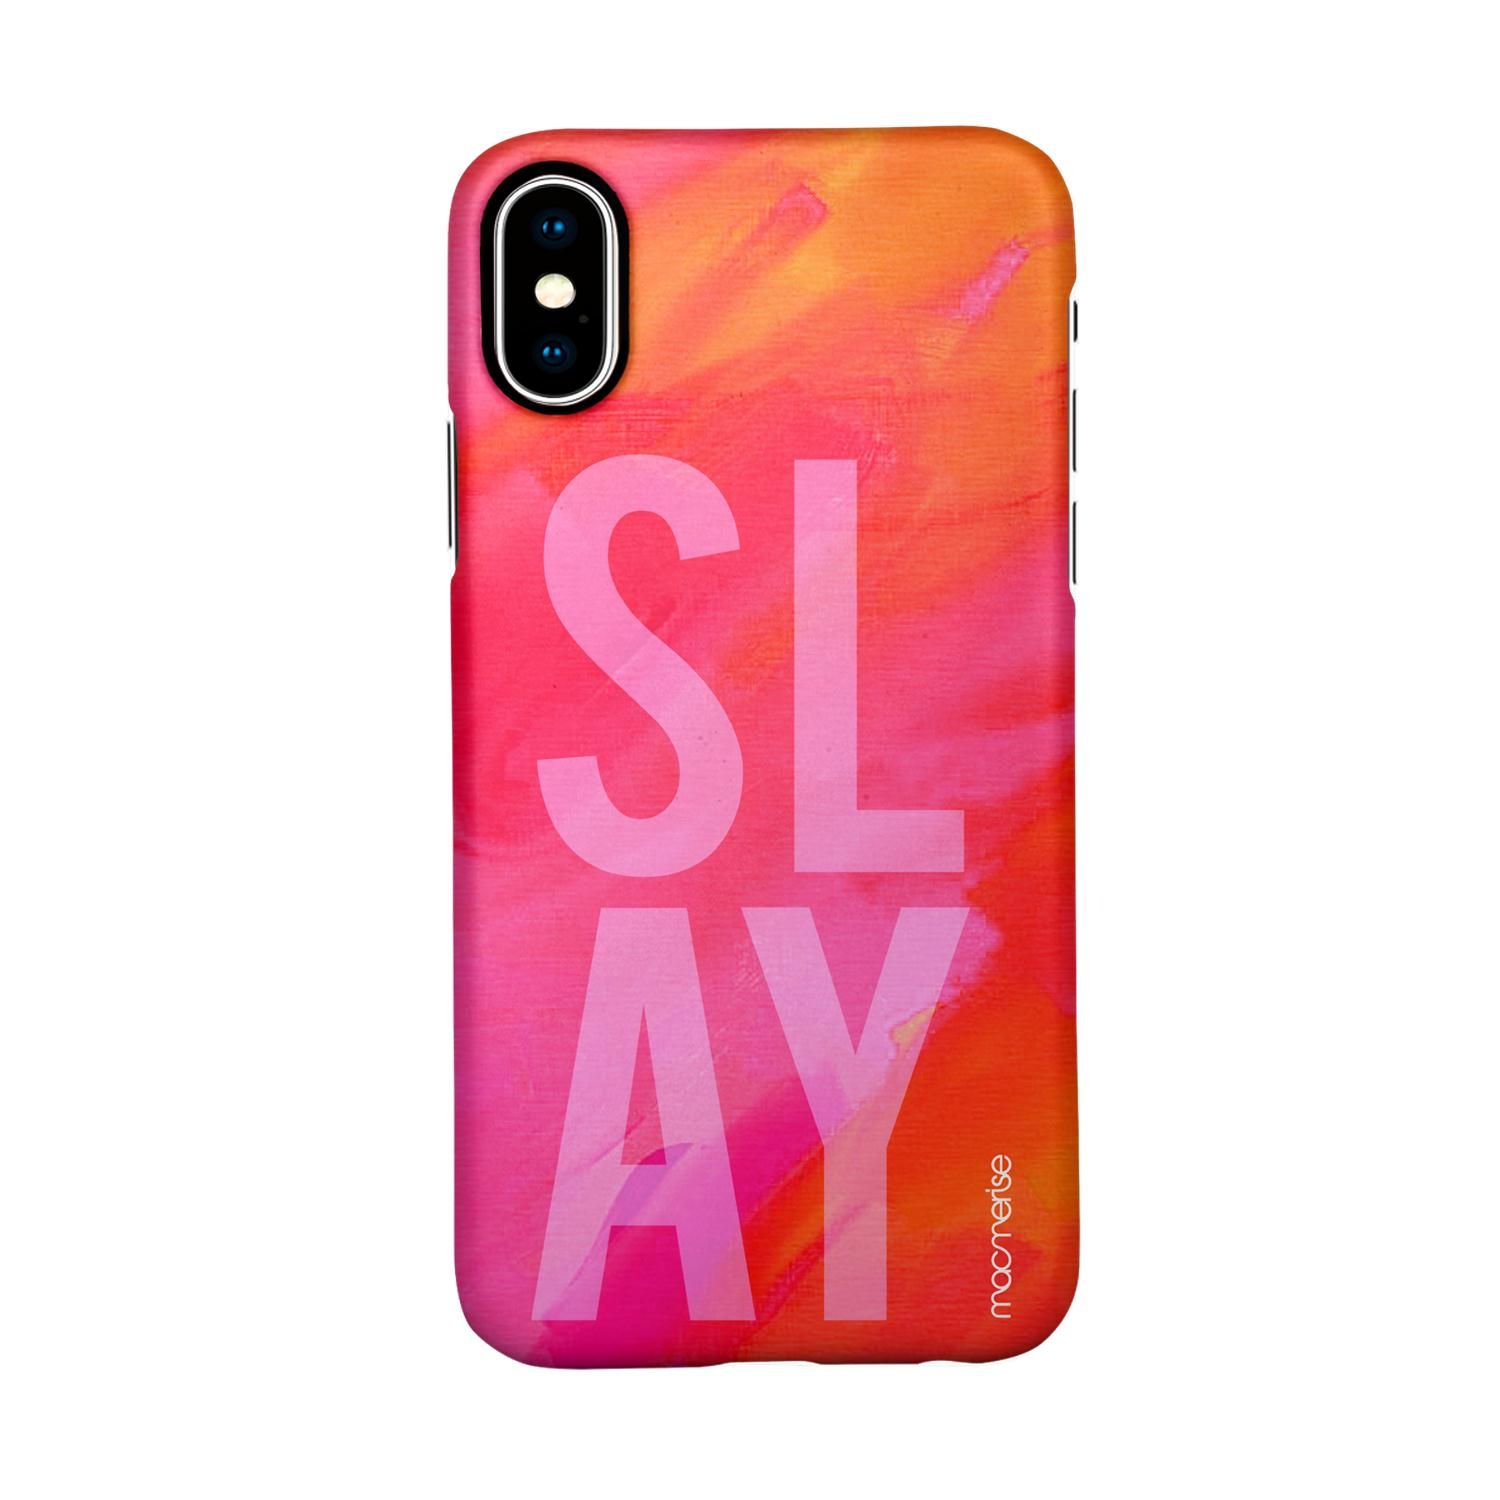 Slay Pink - Sleek Phone Case for iPhone X